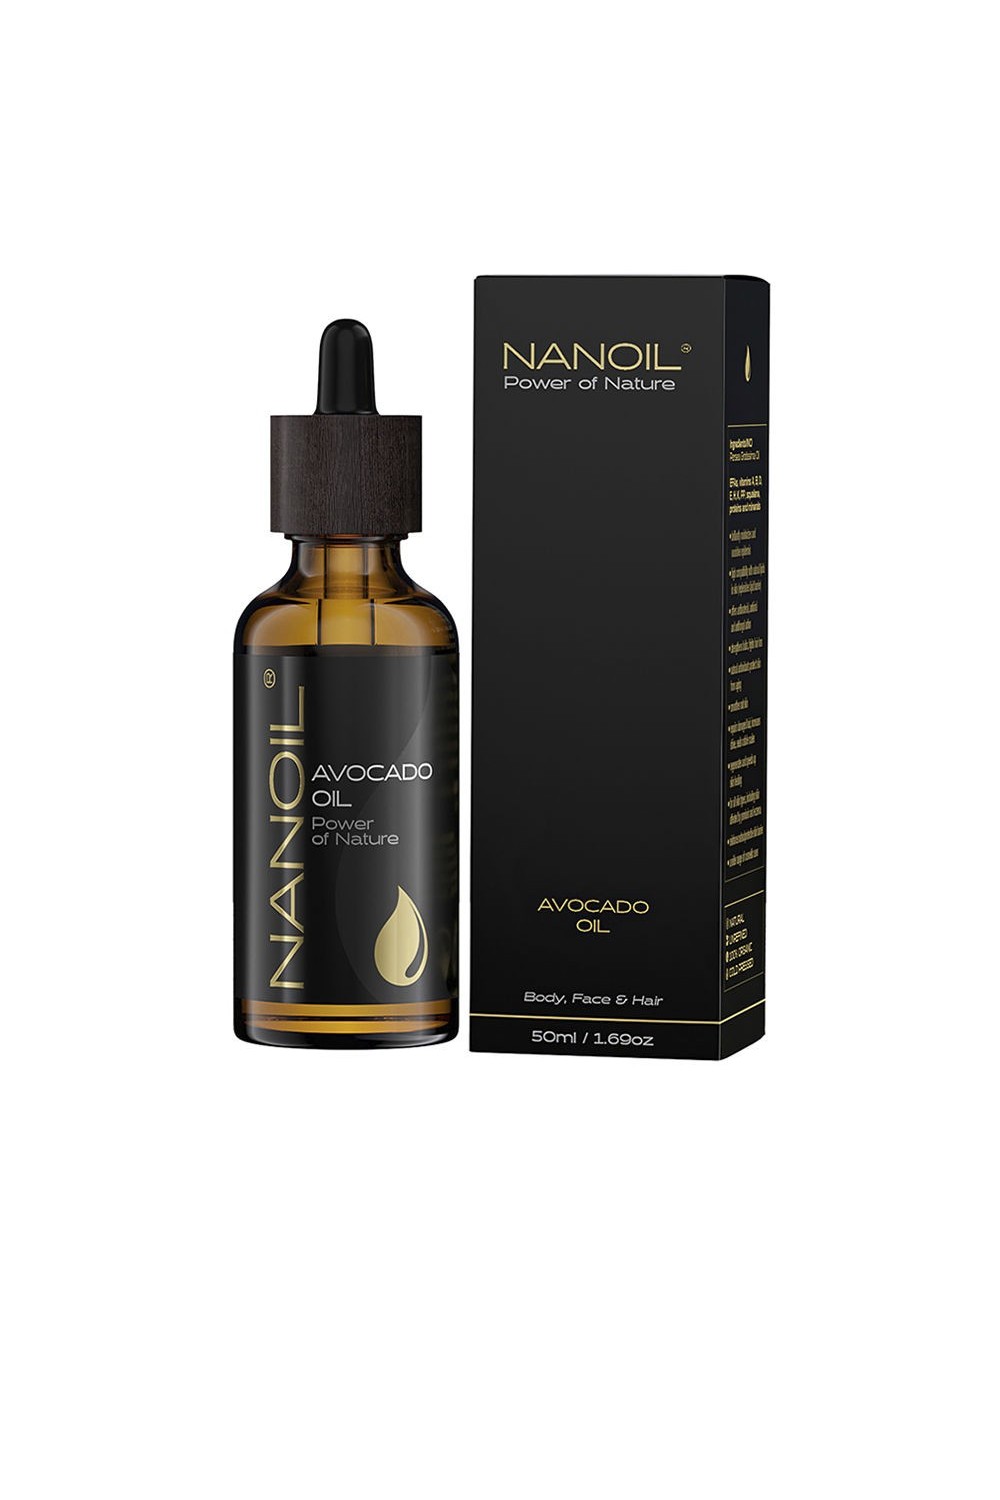 Nanolash Power Of Nature Avocado Oil 50ml